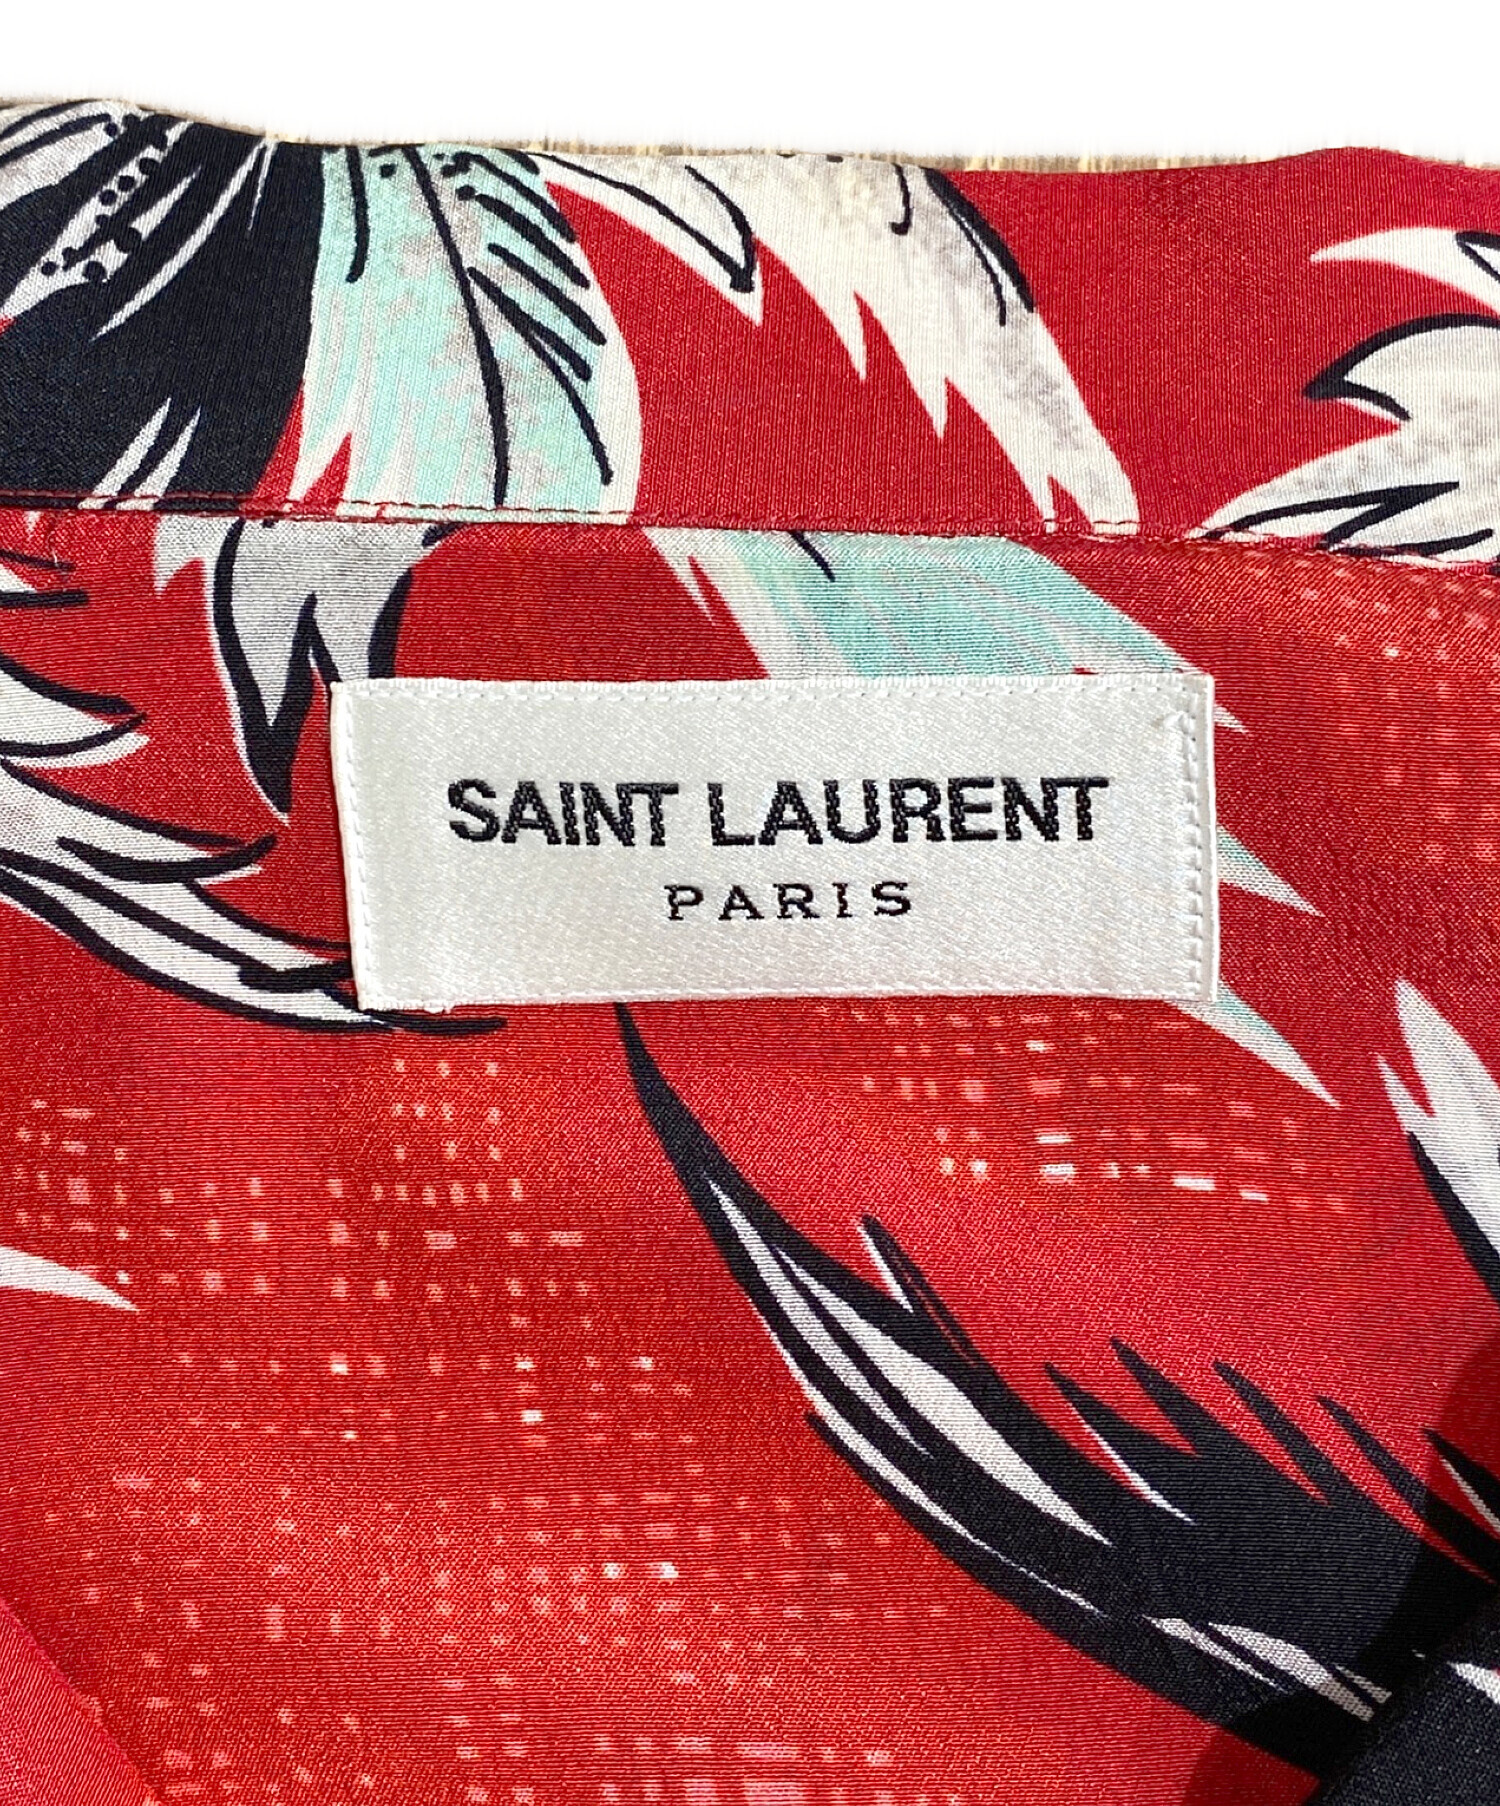 Saint Laurent Paris (サンローランパリ) アロハシャツ レッド サイズ:40